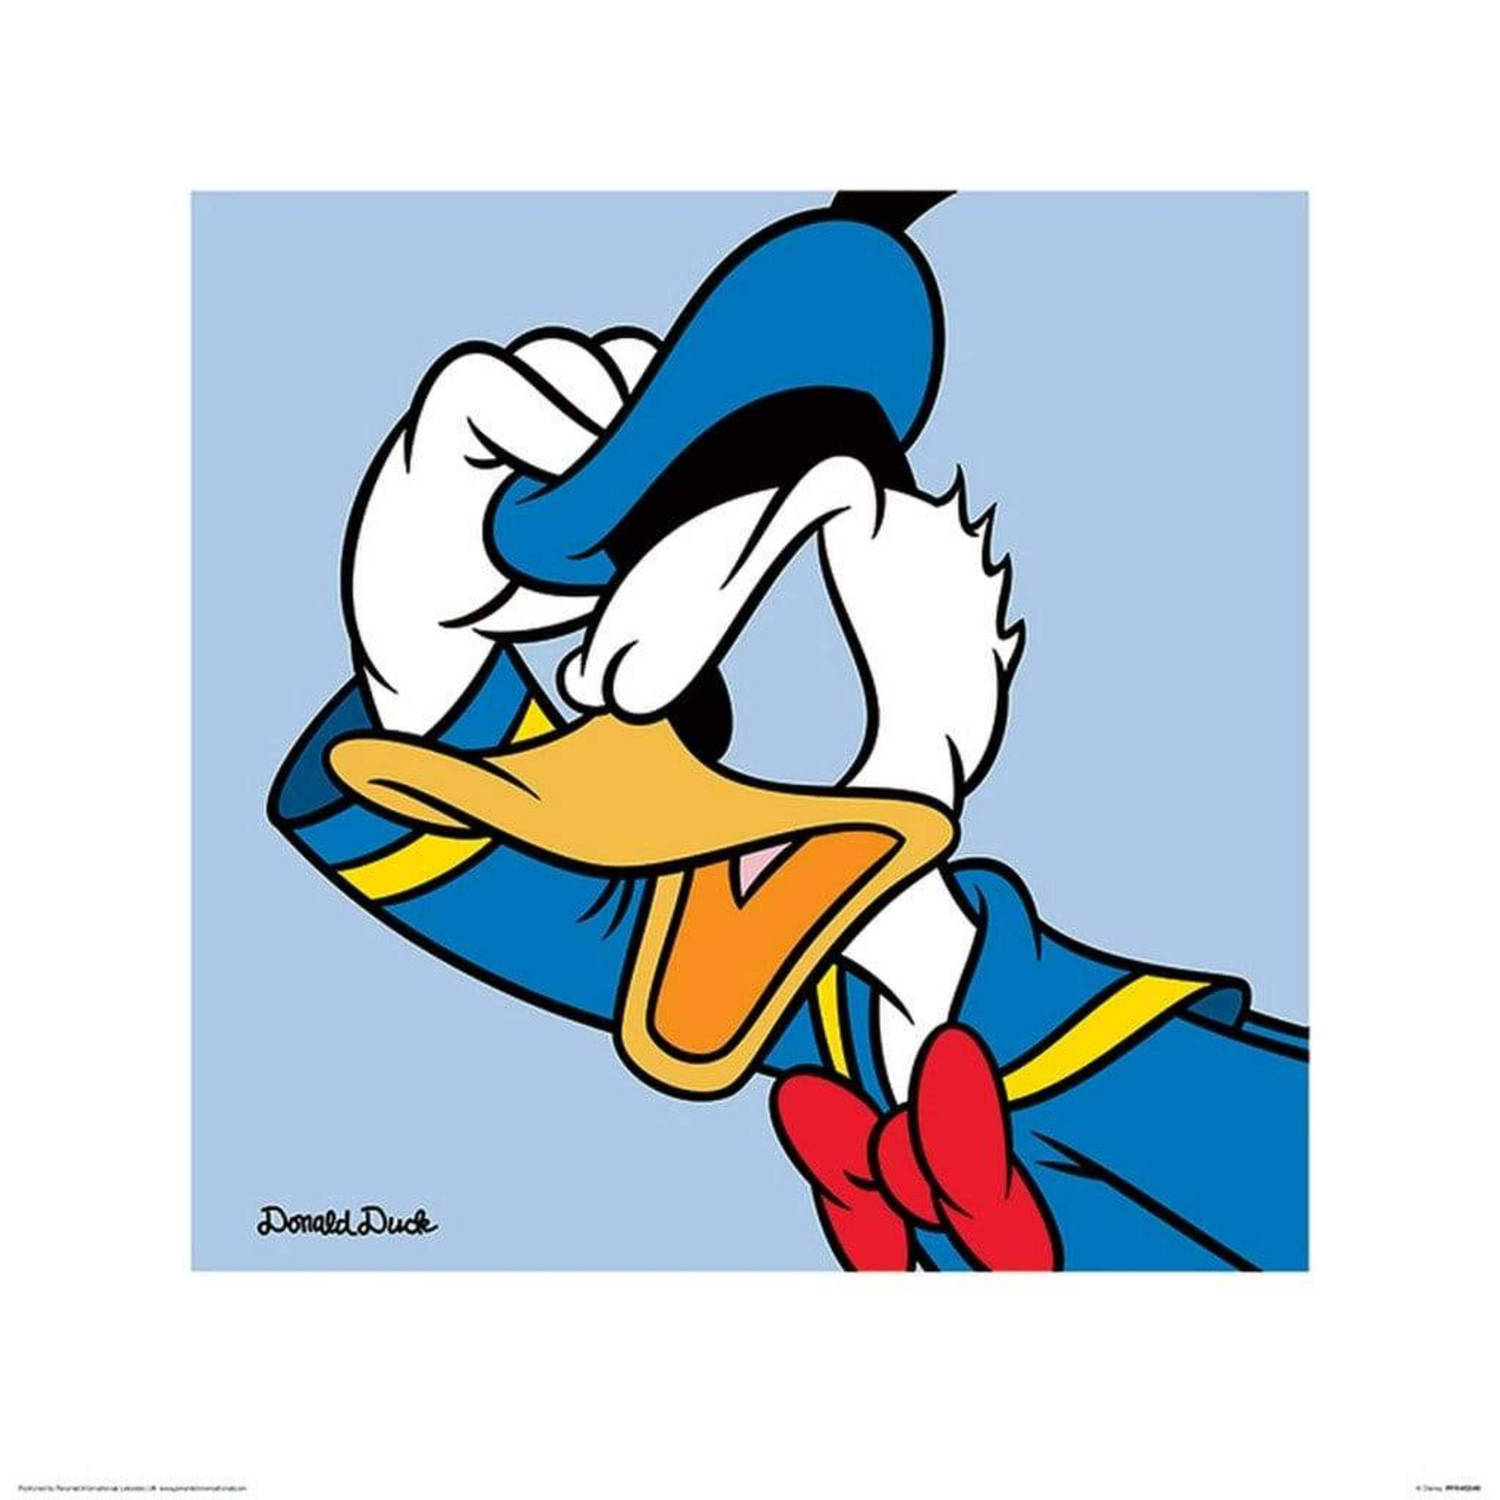 Kunstdruk Donald Duck Blue 40x40cm